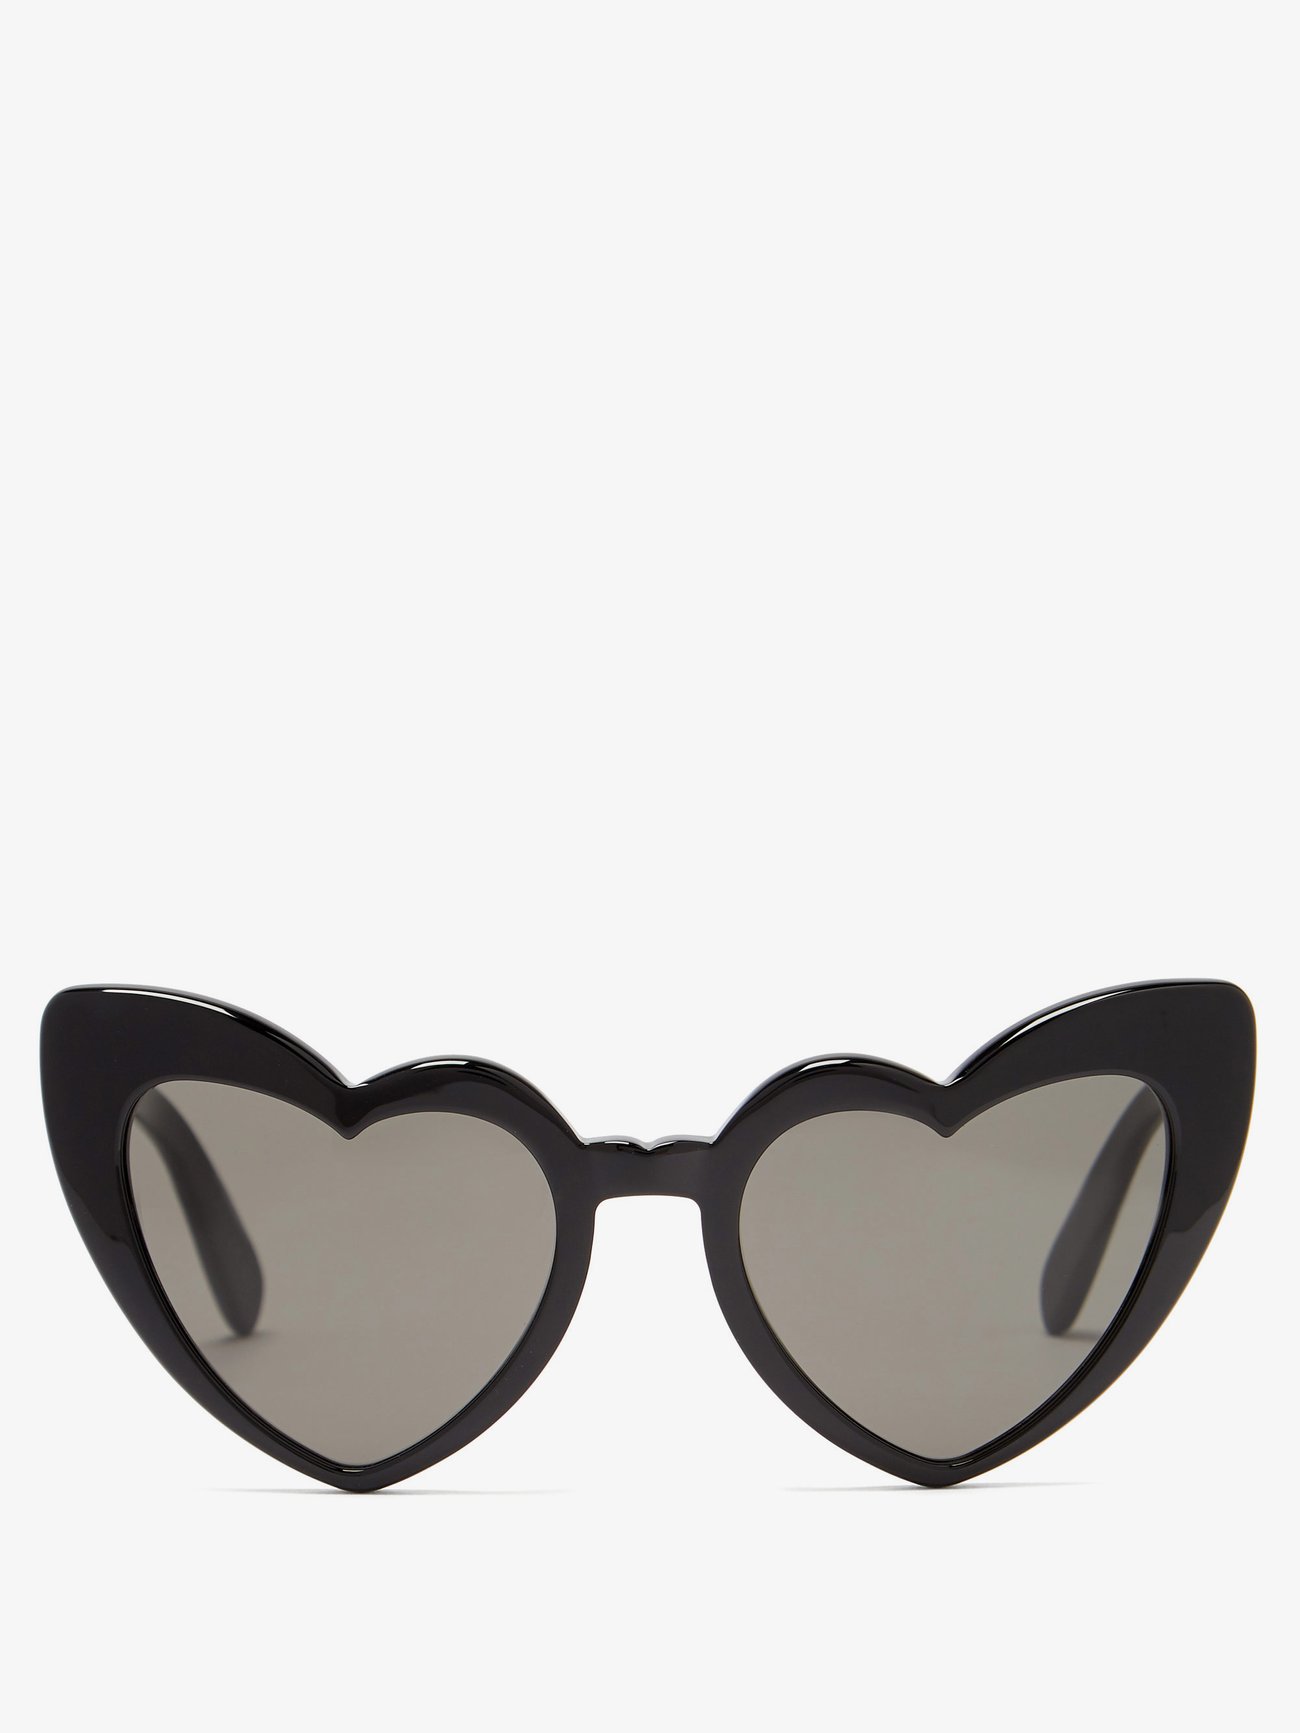 Loulou heart-shaped acetate sunglasses, Saint Laurent Eyewear